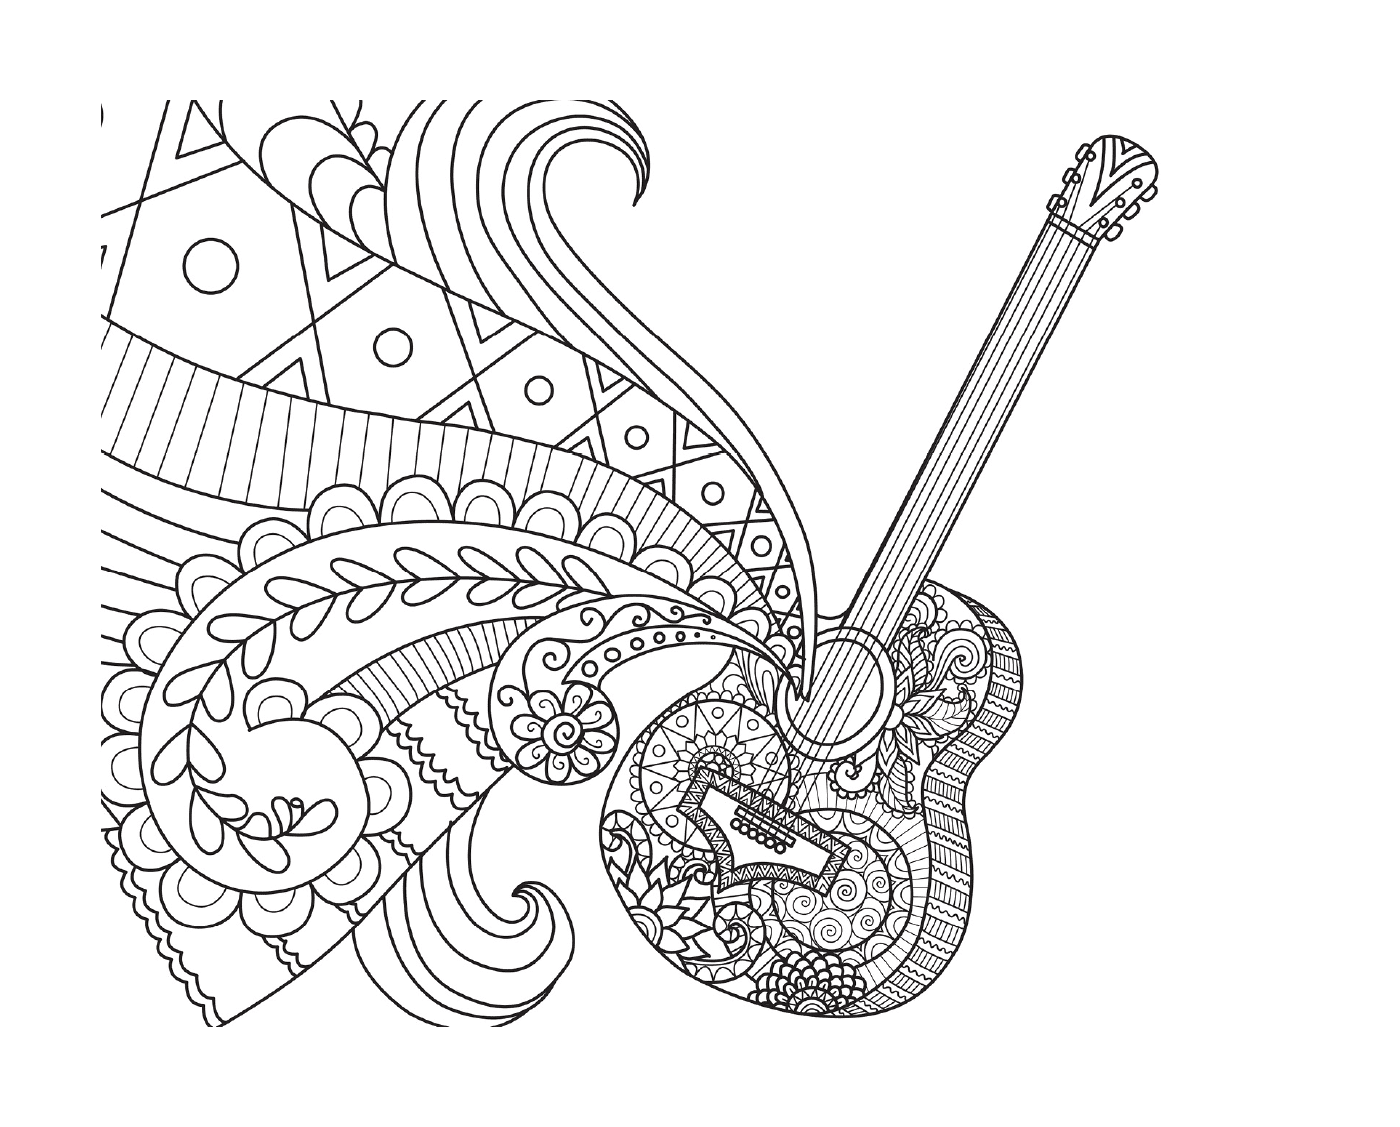  Coco Guitar di Bimbimkha 